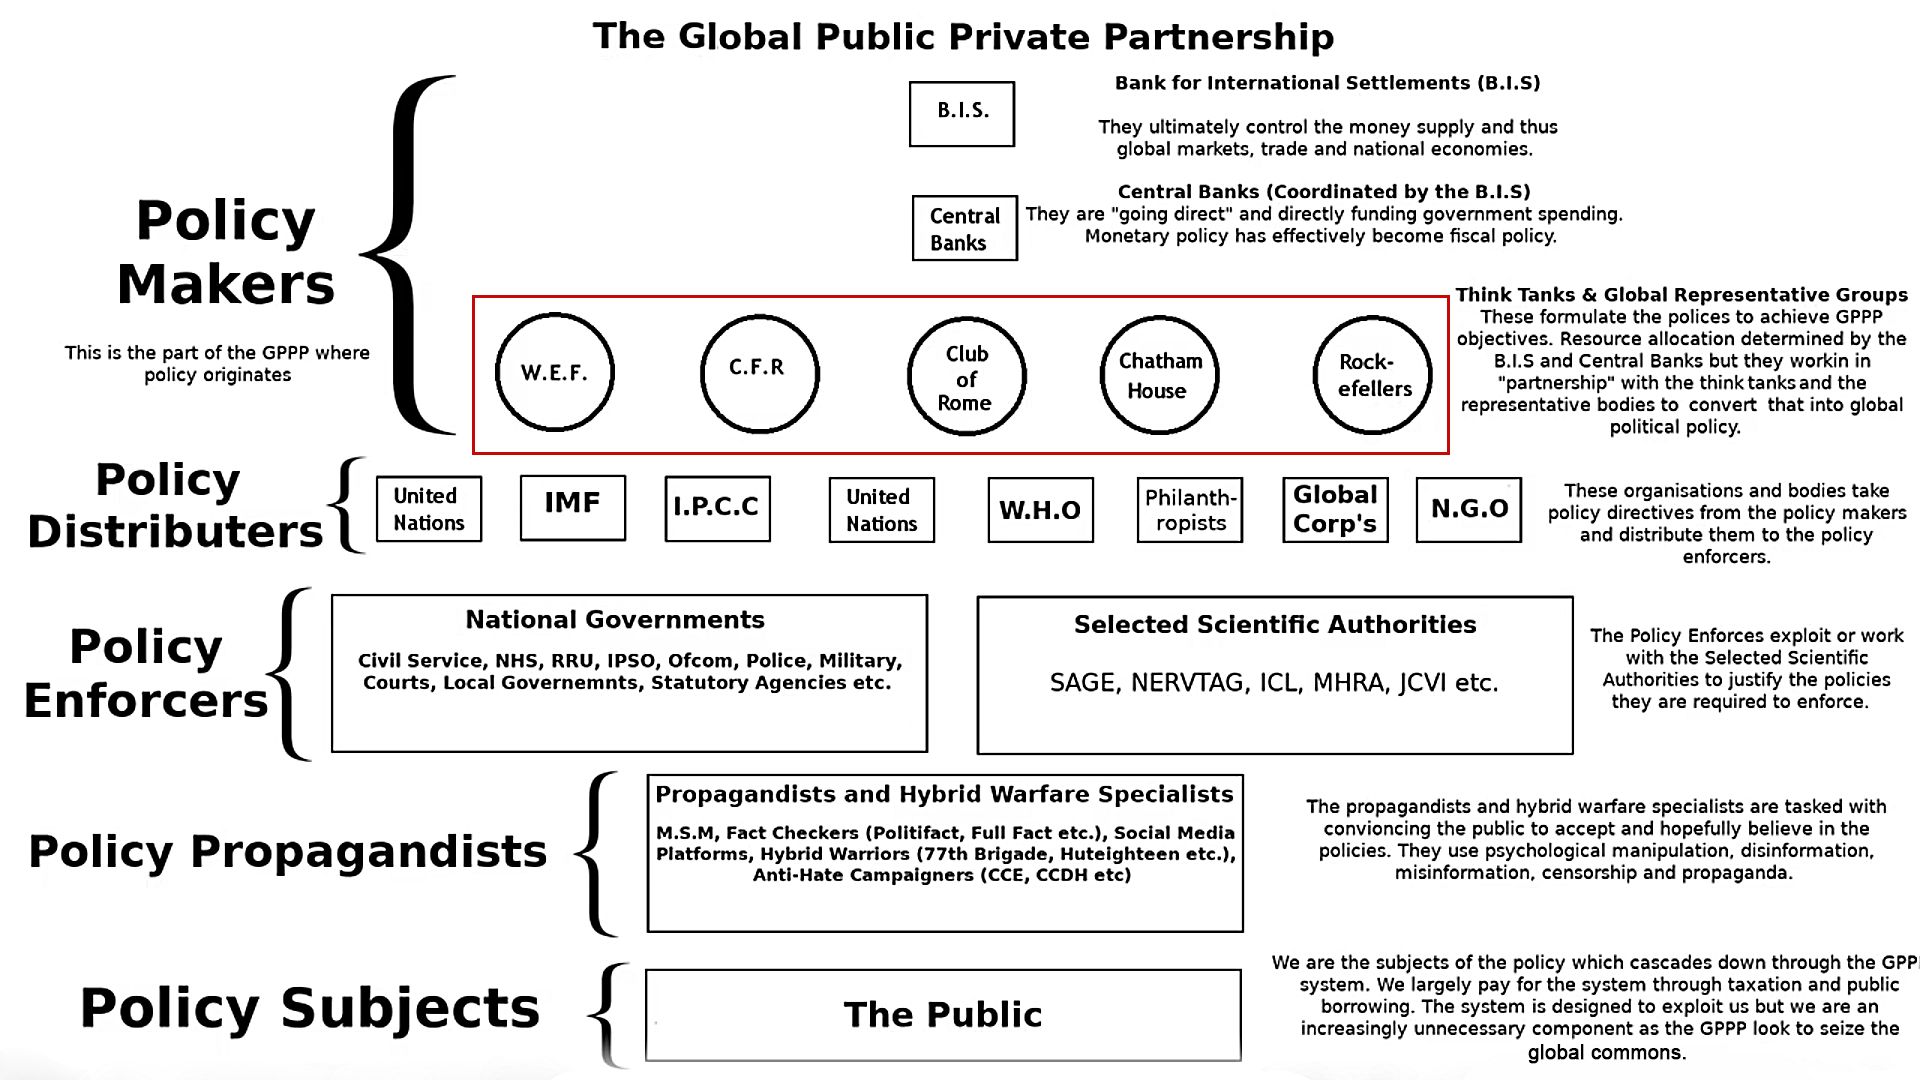 Private/Public partnerships - Ian Davis